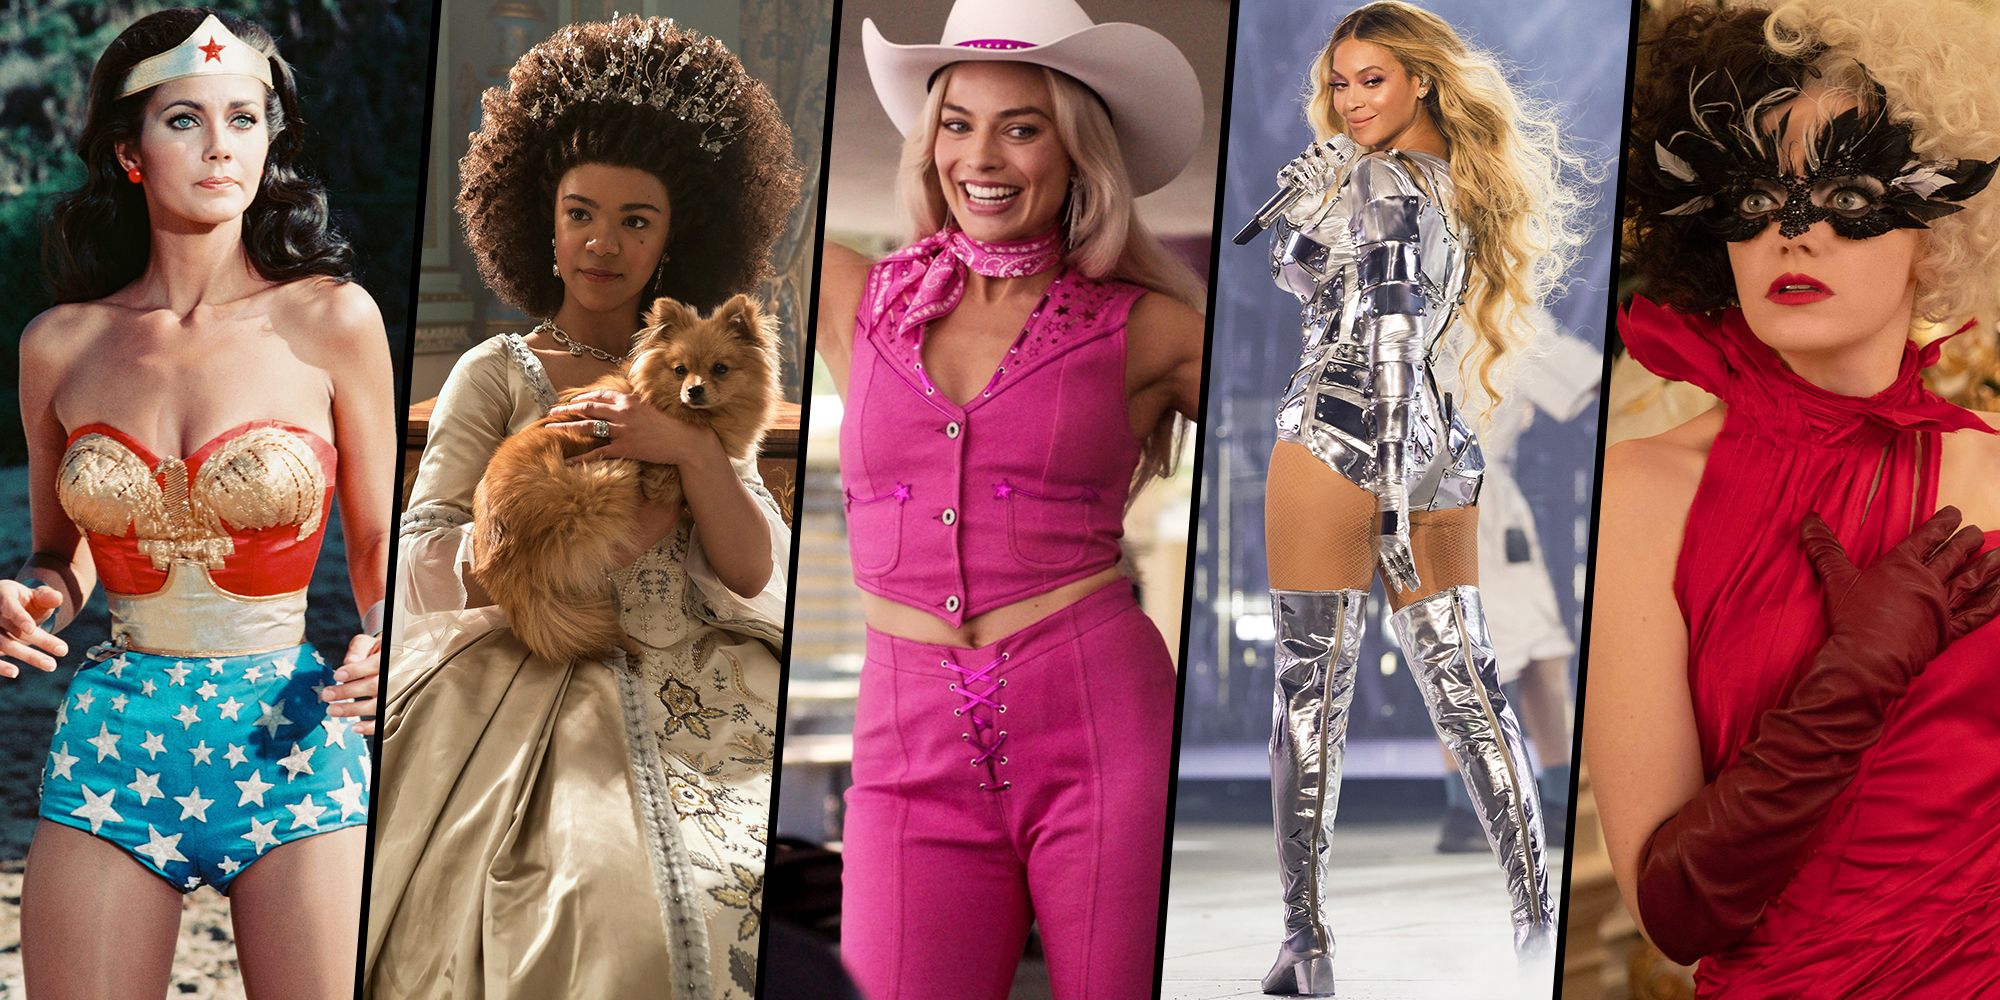 10 best sexy Halloween costume ideas for women 2019